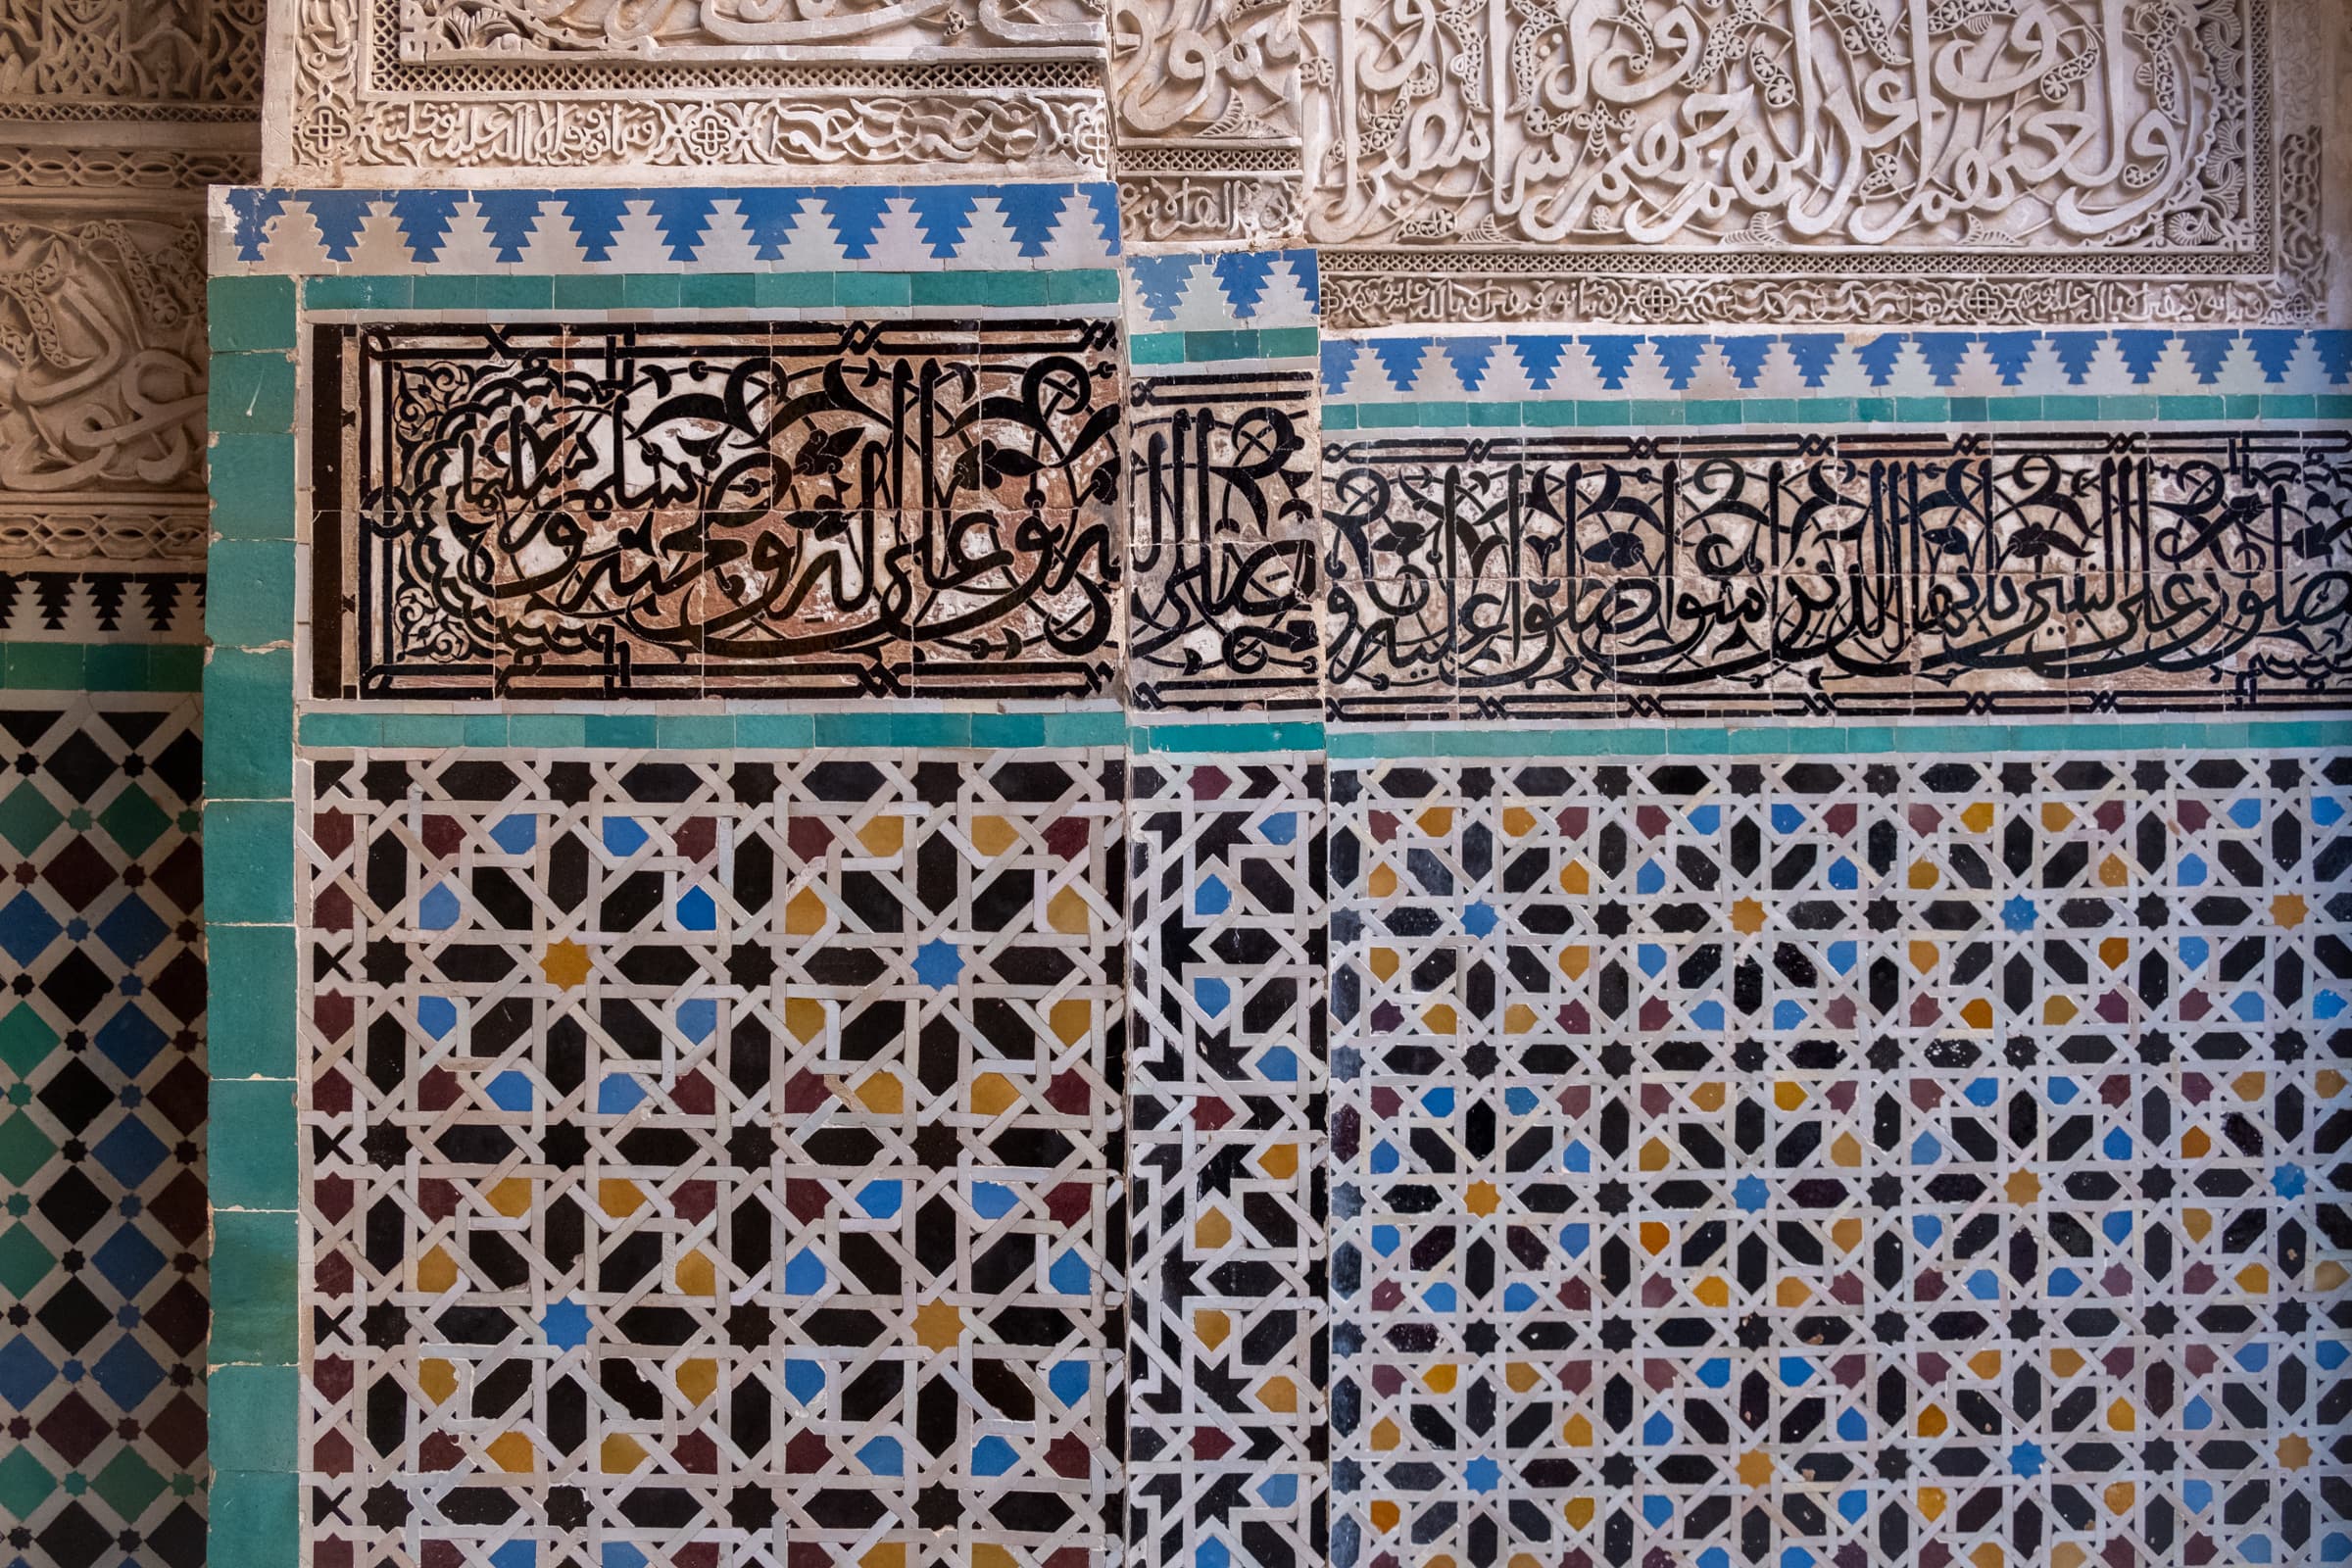 Closeups of intricate Islamic tiles